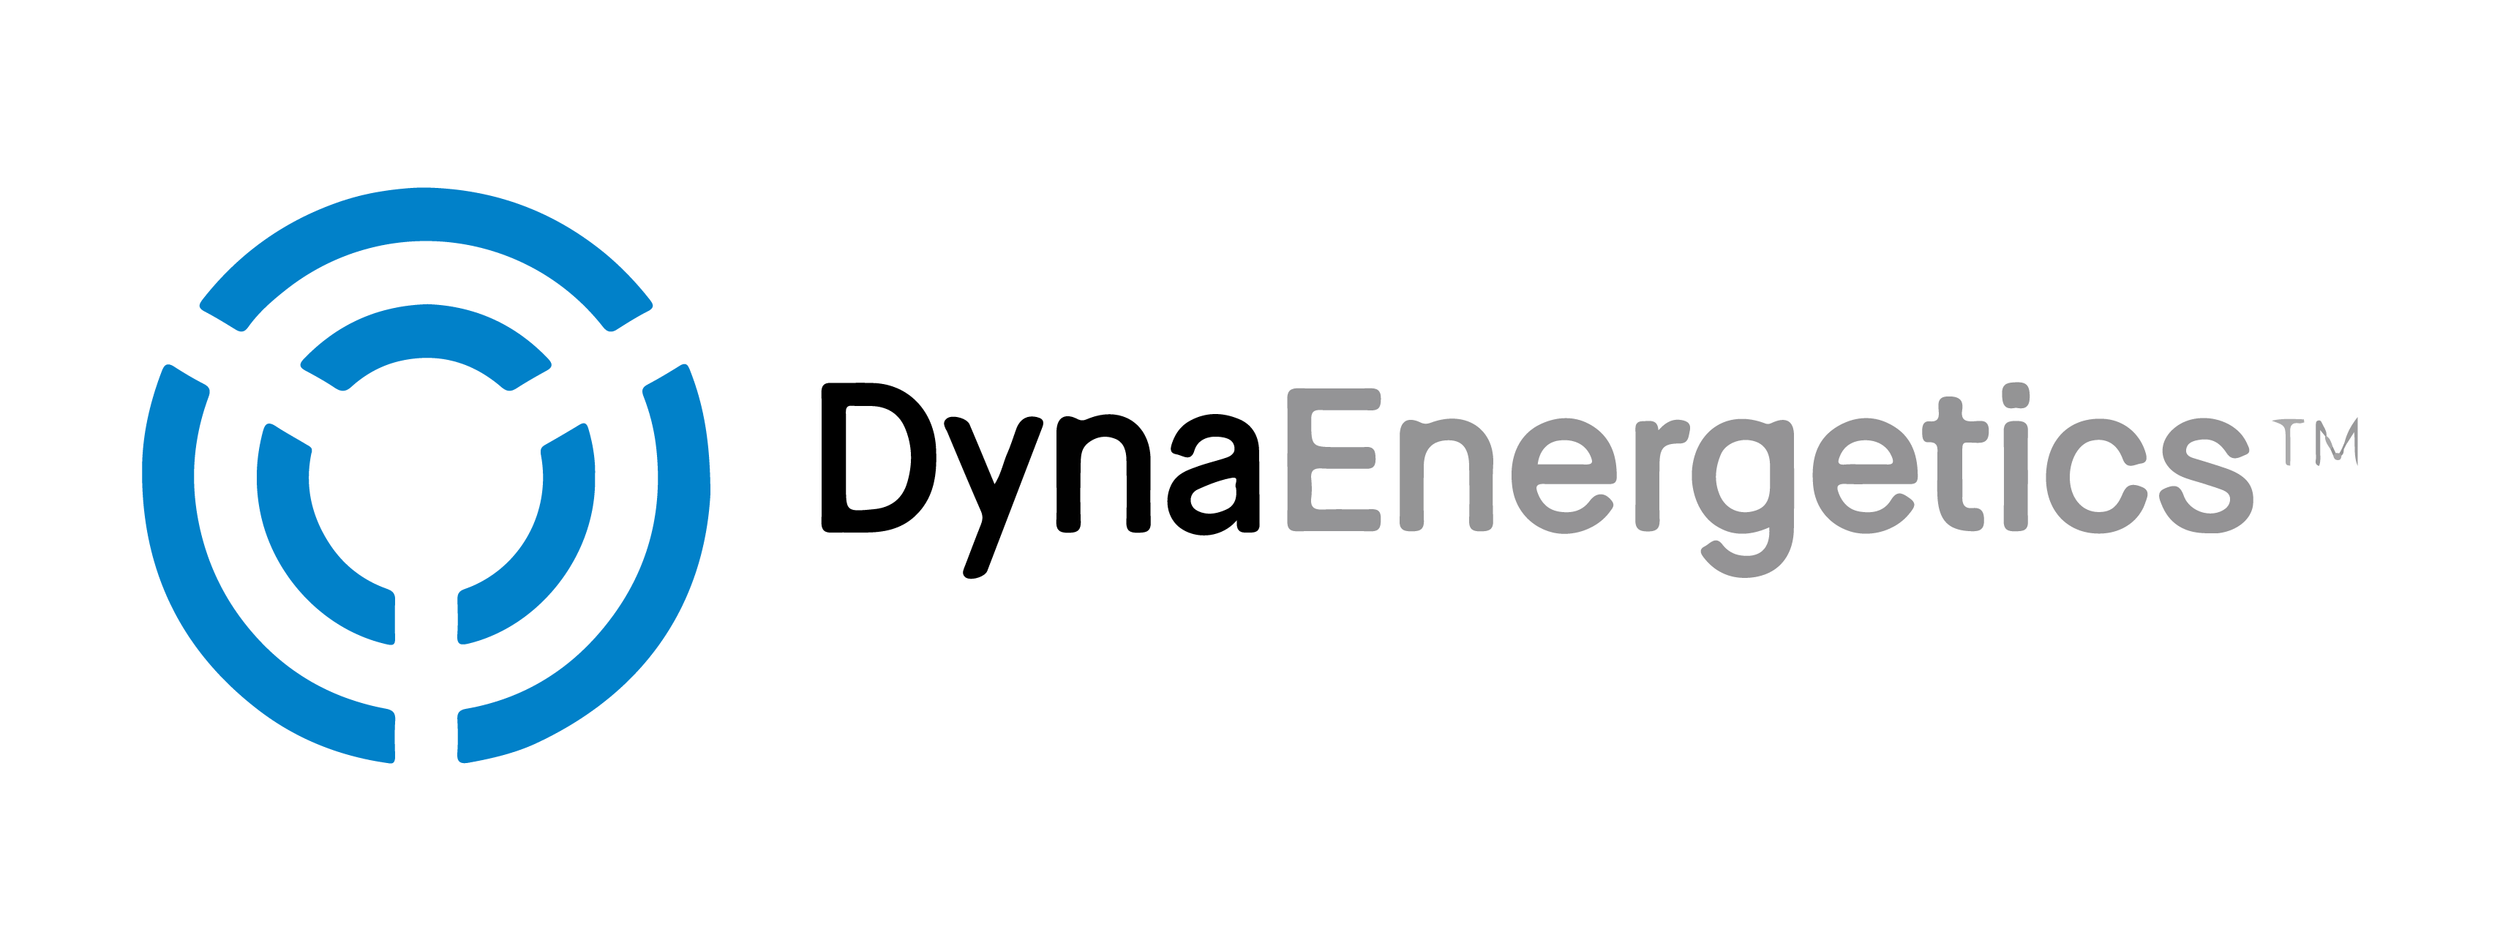 DynaEnergetics-03.png